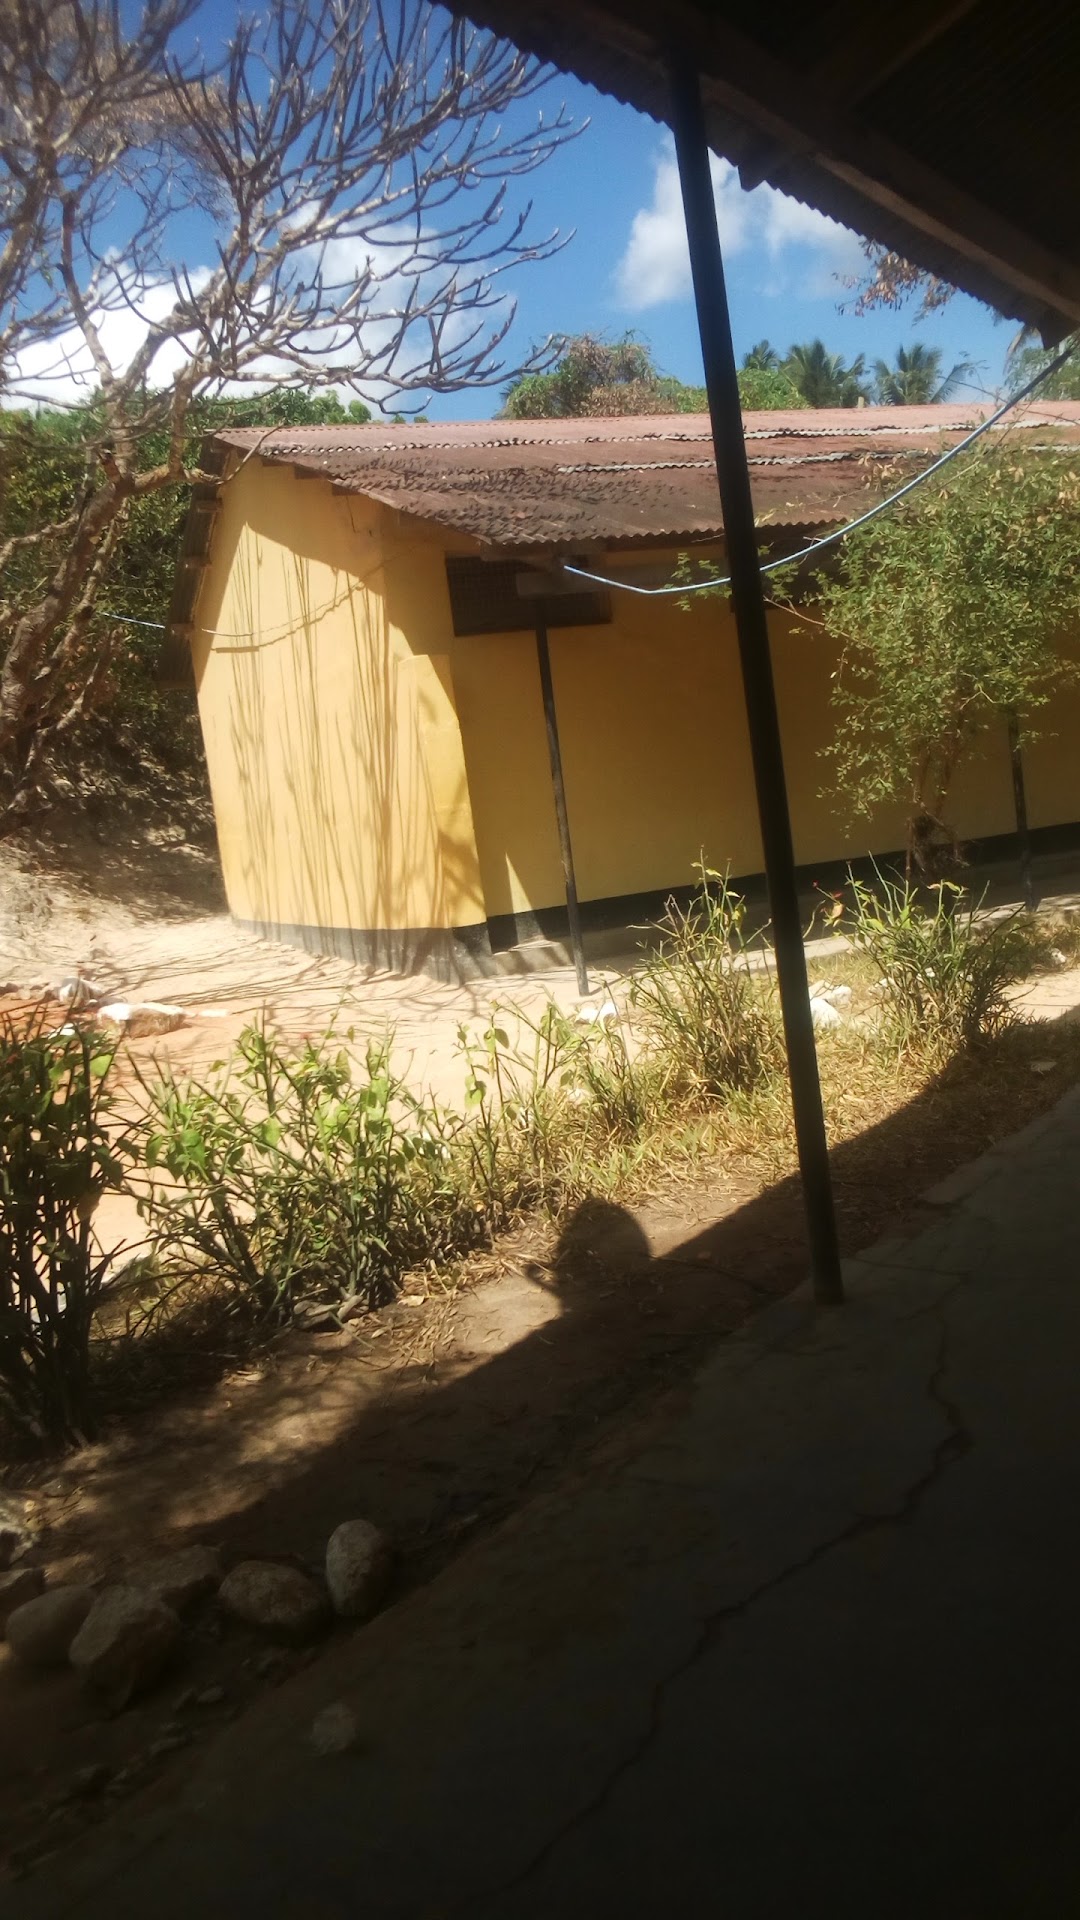 Mkonge Secondary School Lindi Region Tanzania